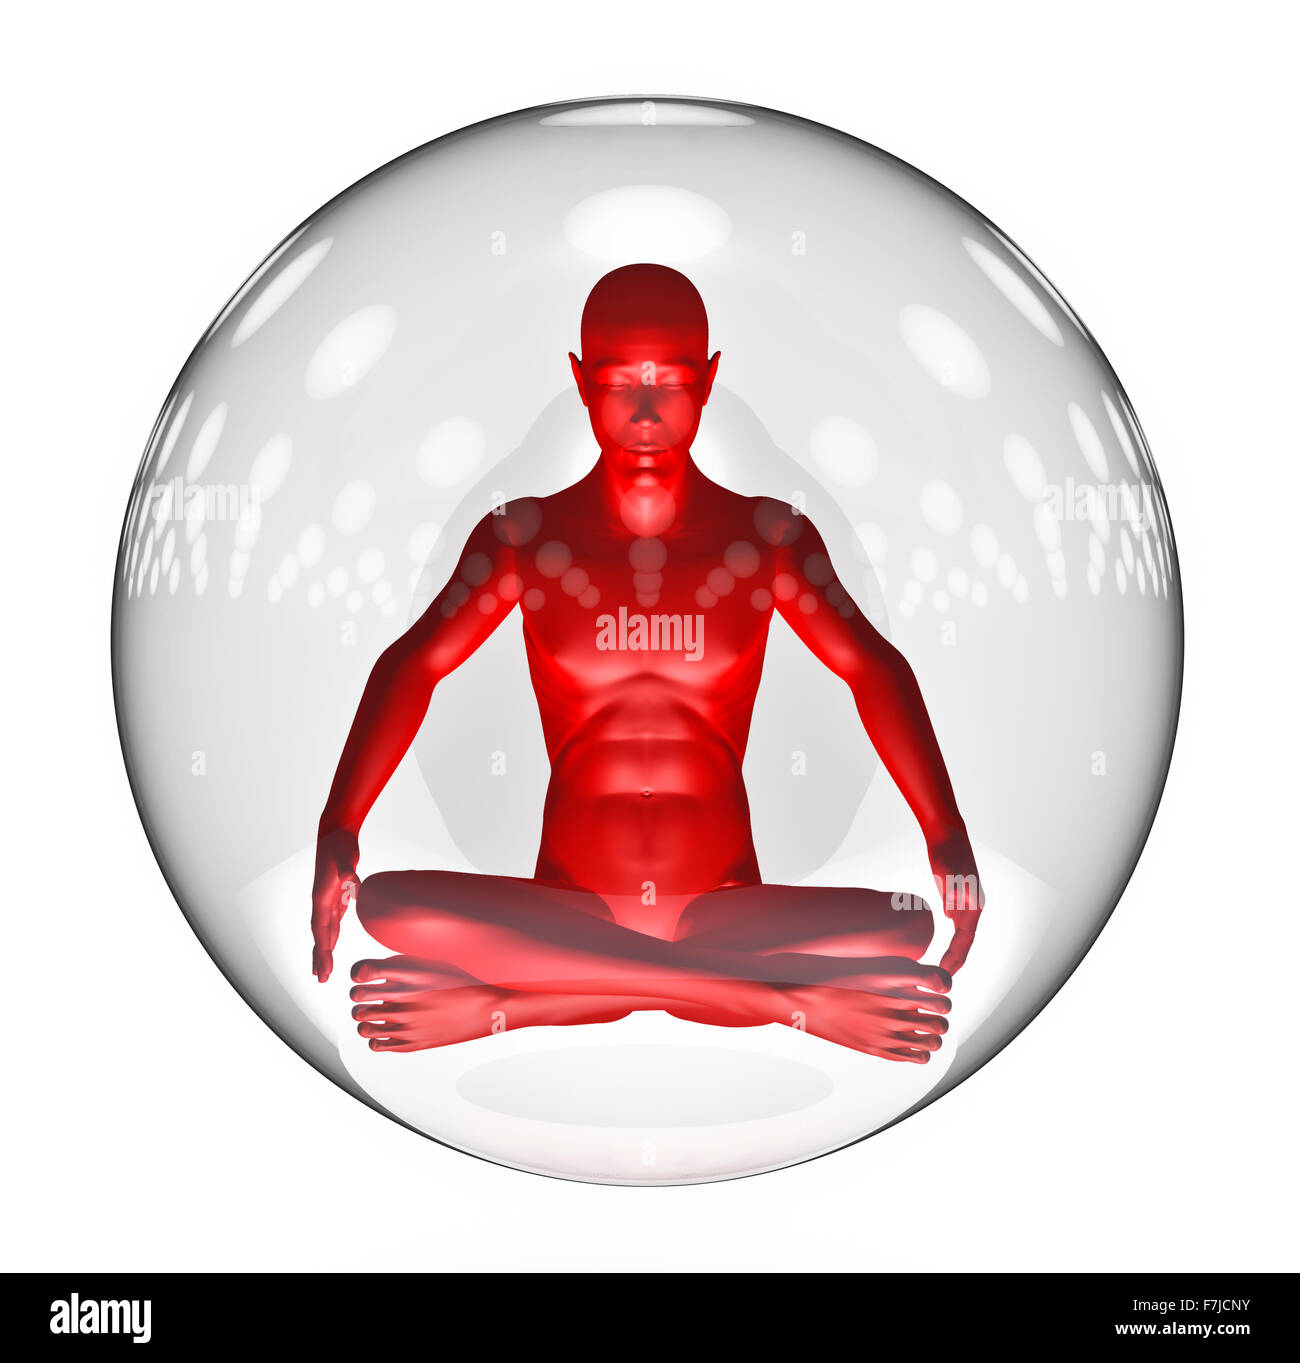 Serenity globe / 3D render of meditating male figure inside glass globe Stock Photo